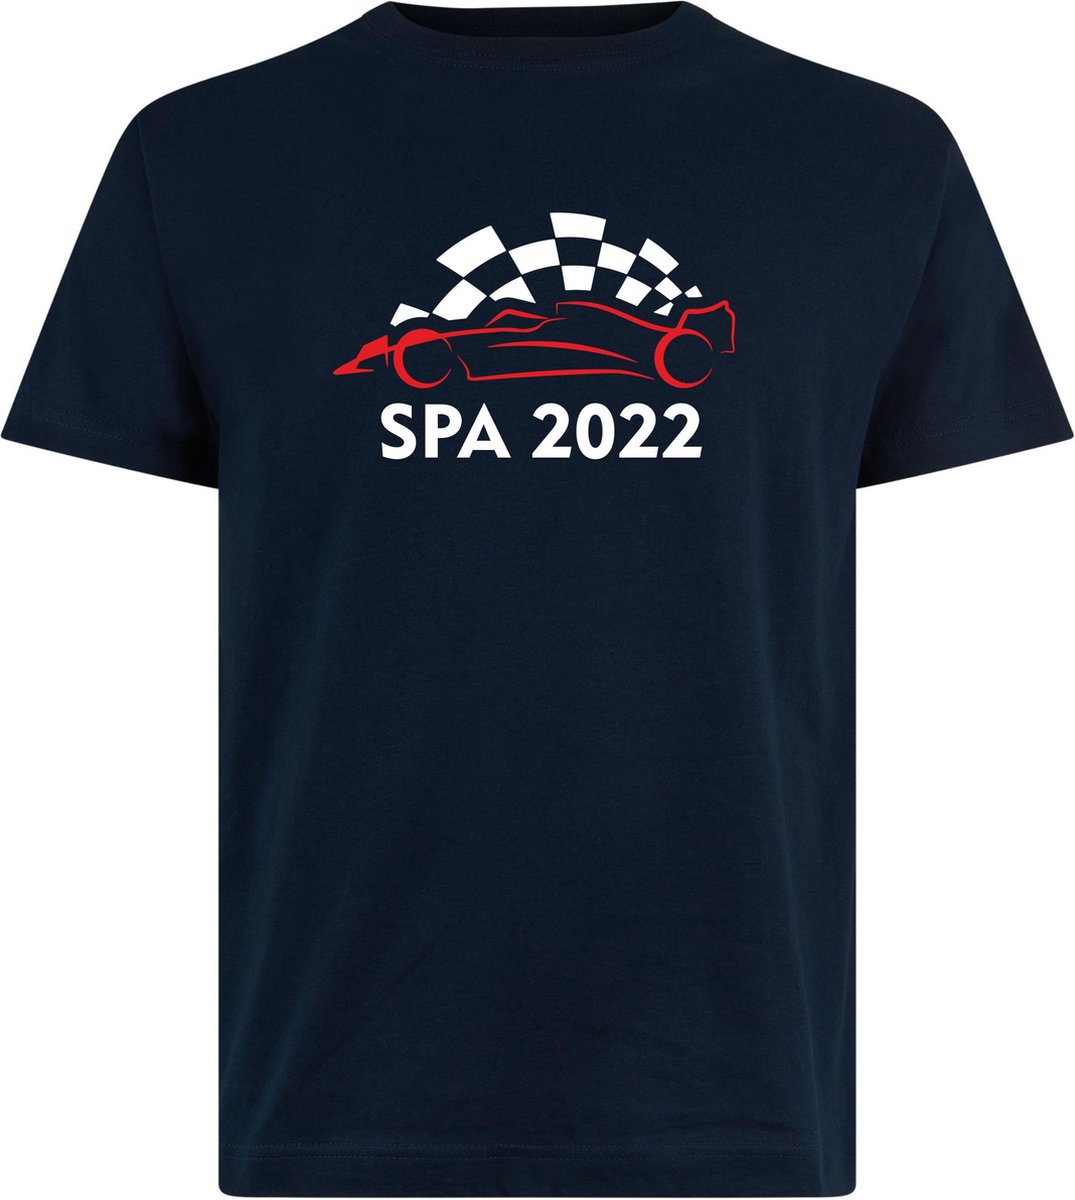 T-shirt kinderen Spa 2022 met raceauto | Max Verstappen / Red Bull Racing / Formule 1 fan | Grand Prix Circuit Spa-Francorchamps | kleding shirt | Navy | maat 104